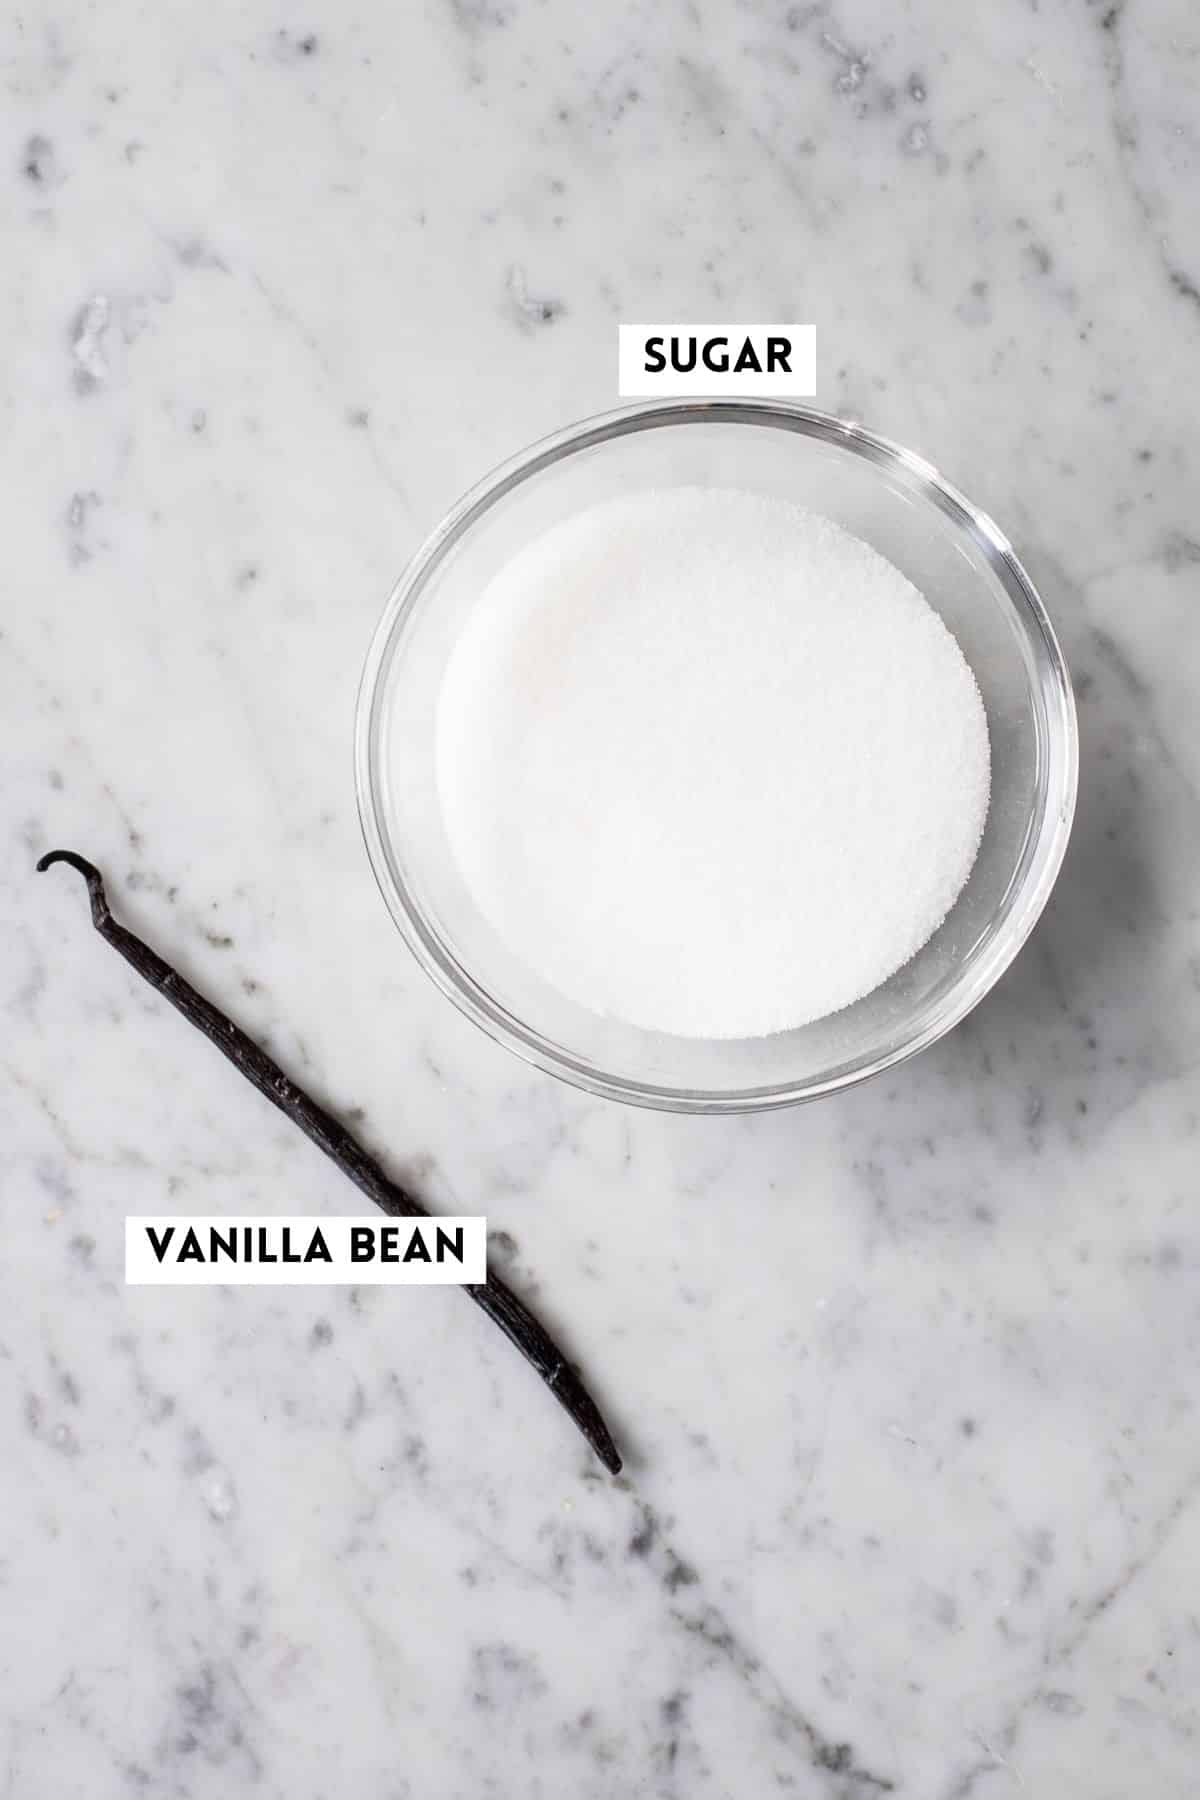 Ingredients for vanilla sugar.